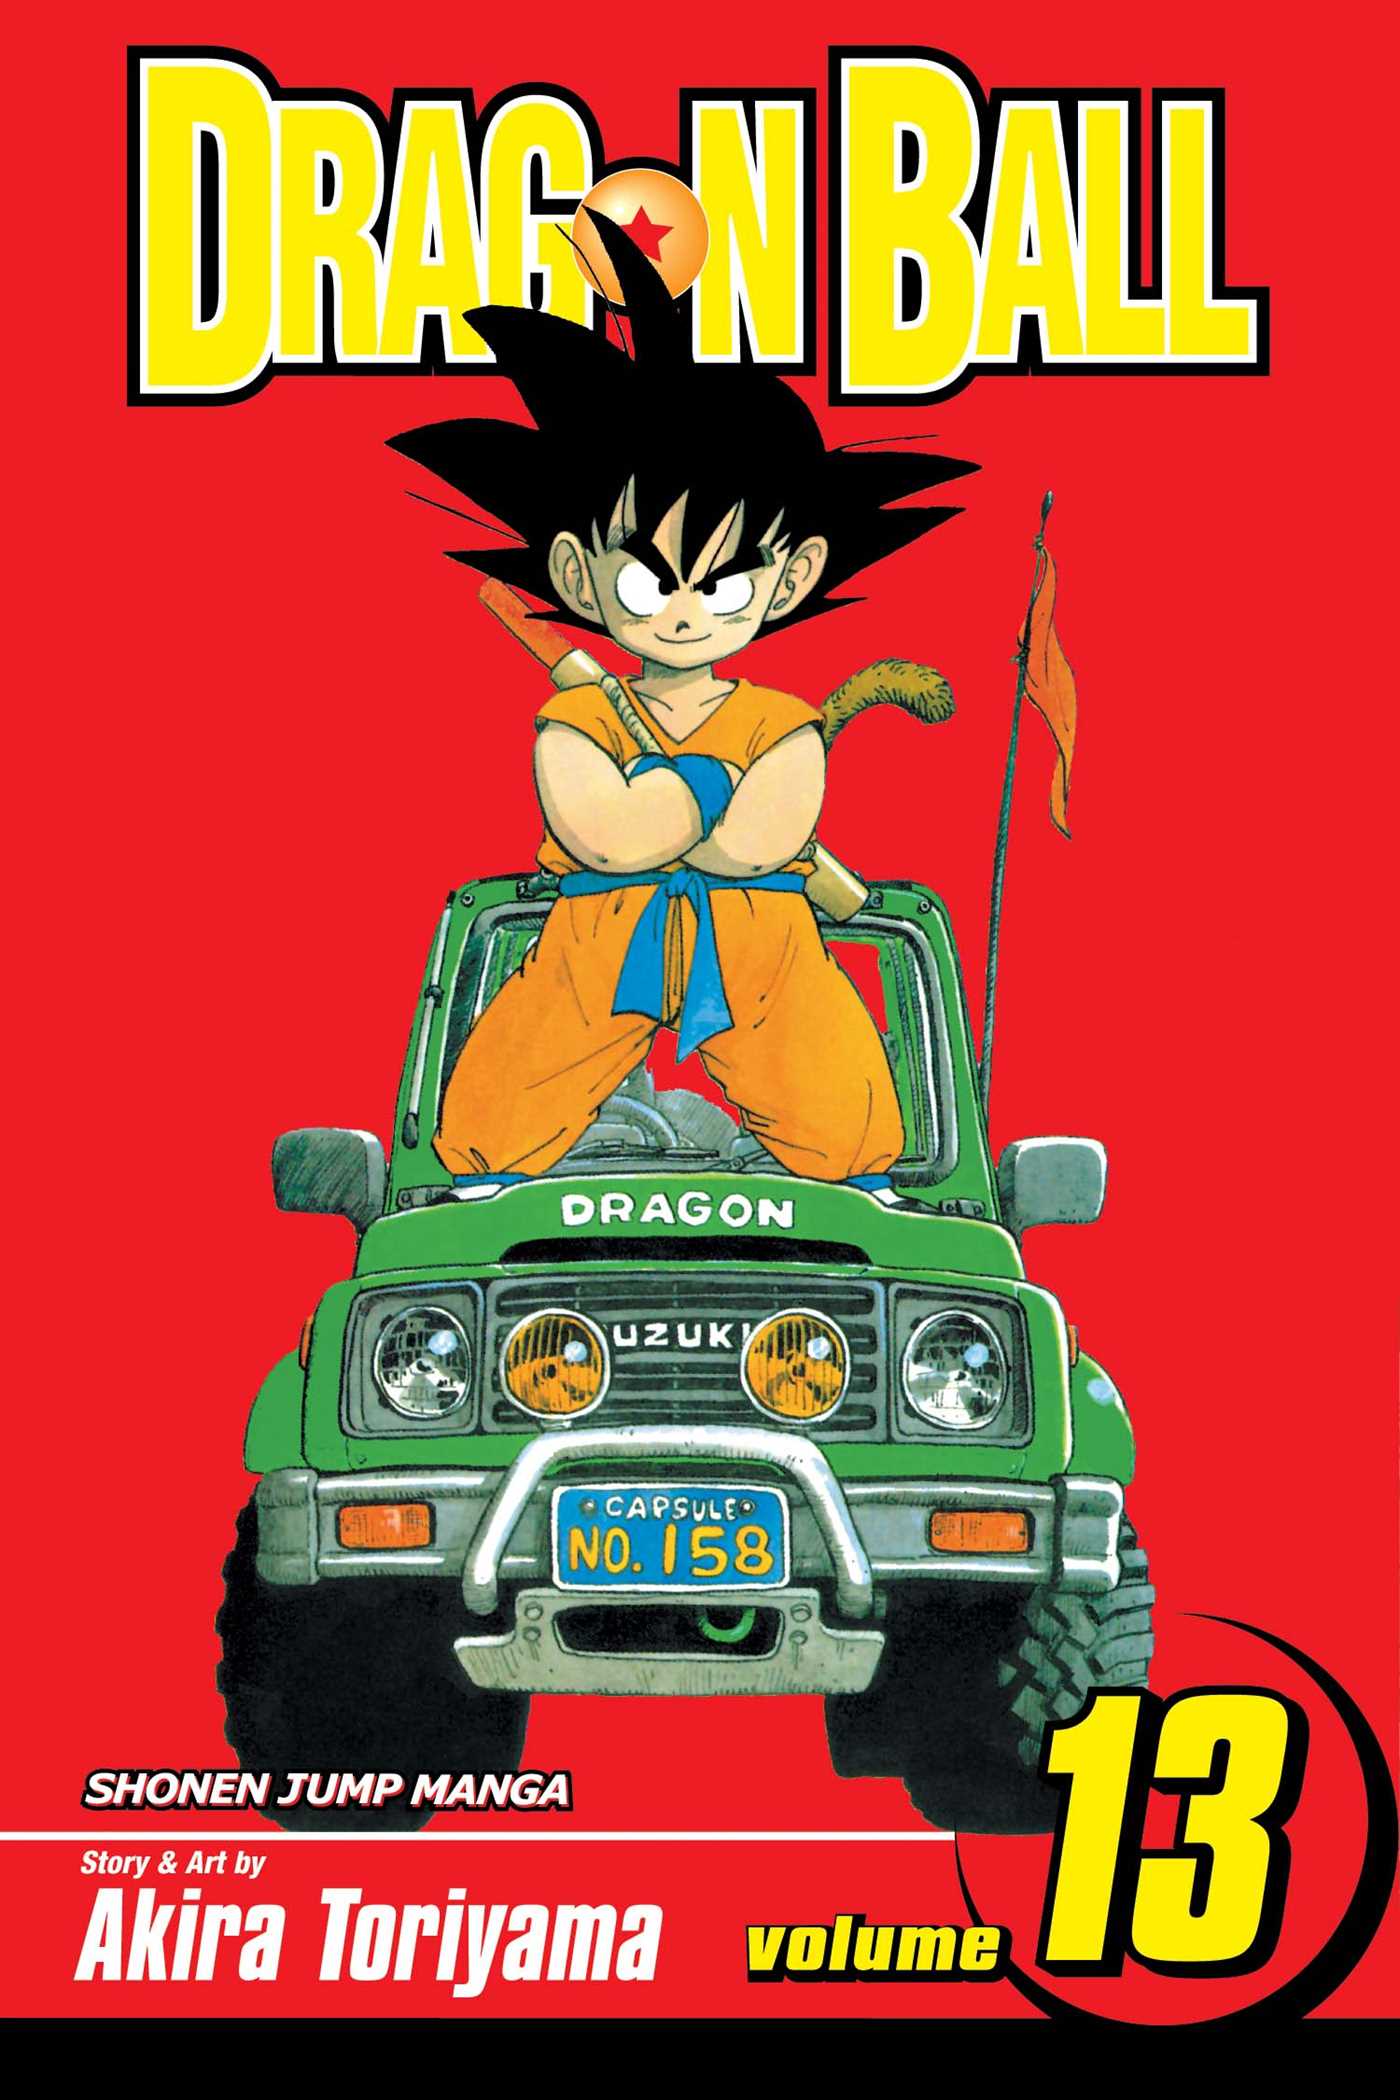 Dragon Ball, Vol. 3: The Training of Kame-Sen'nin by Akira Toriyama